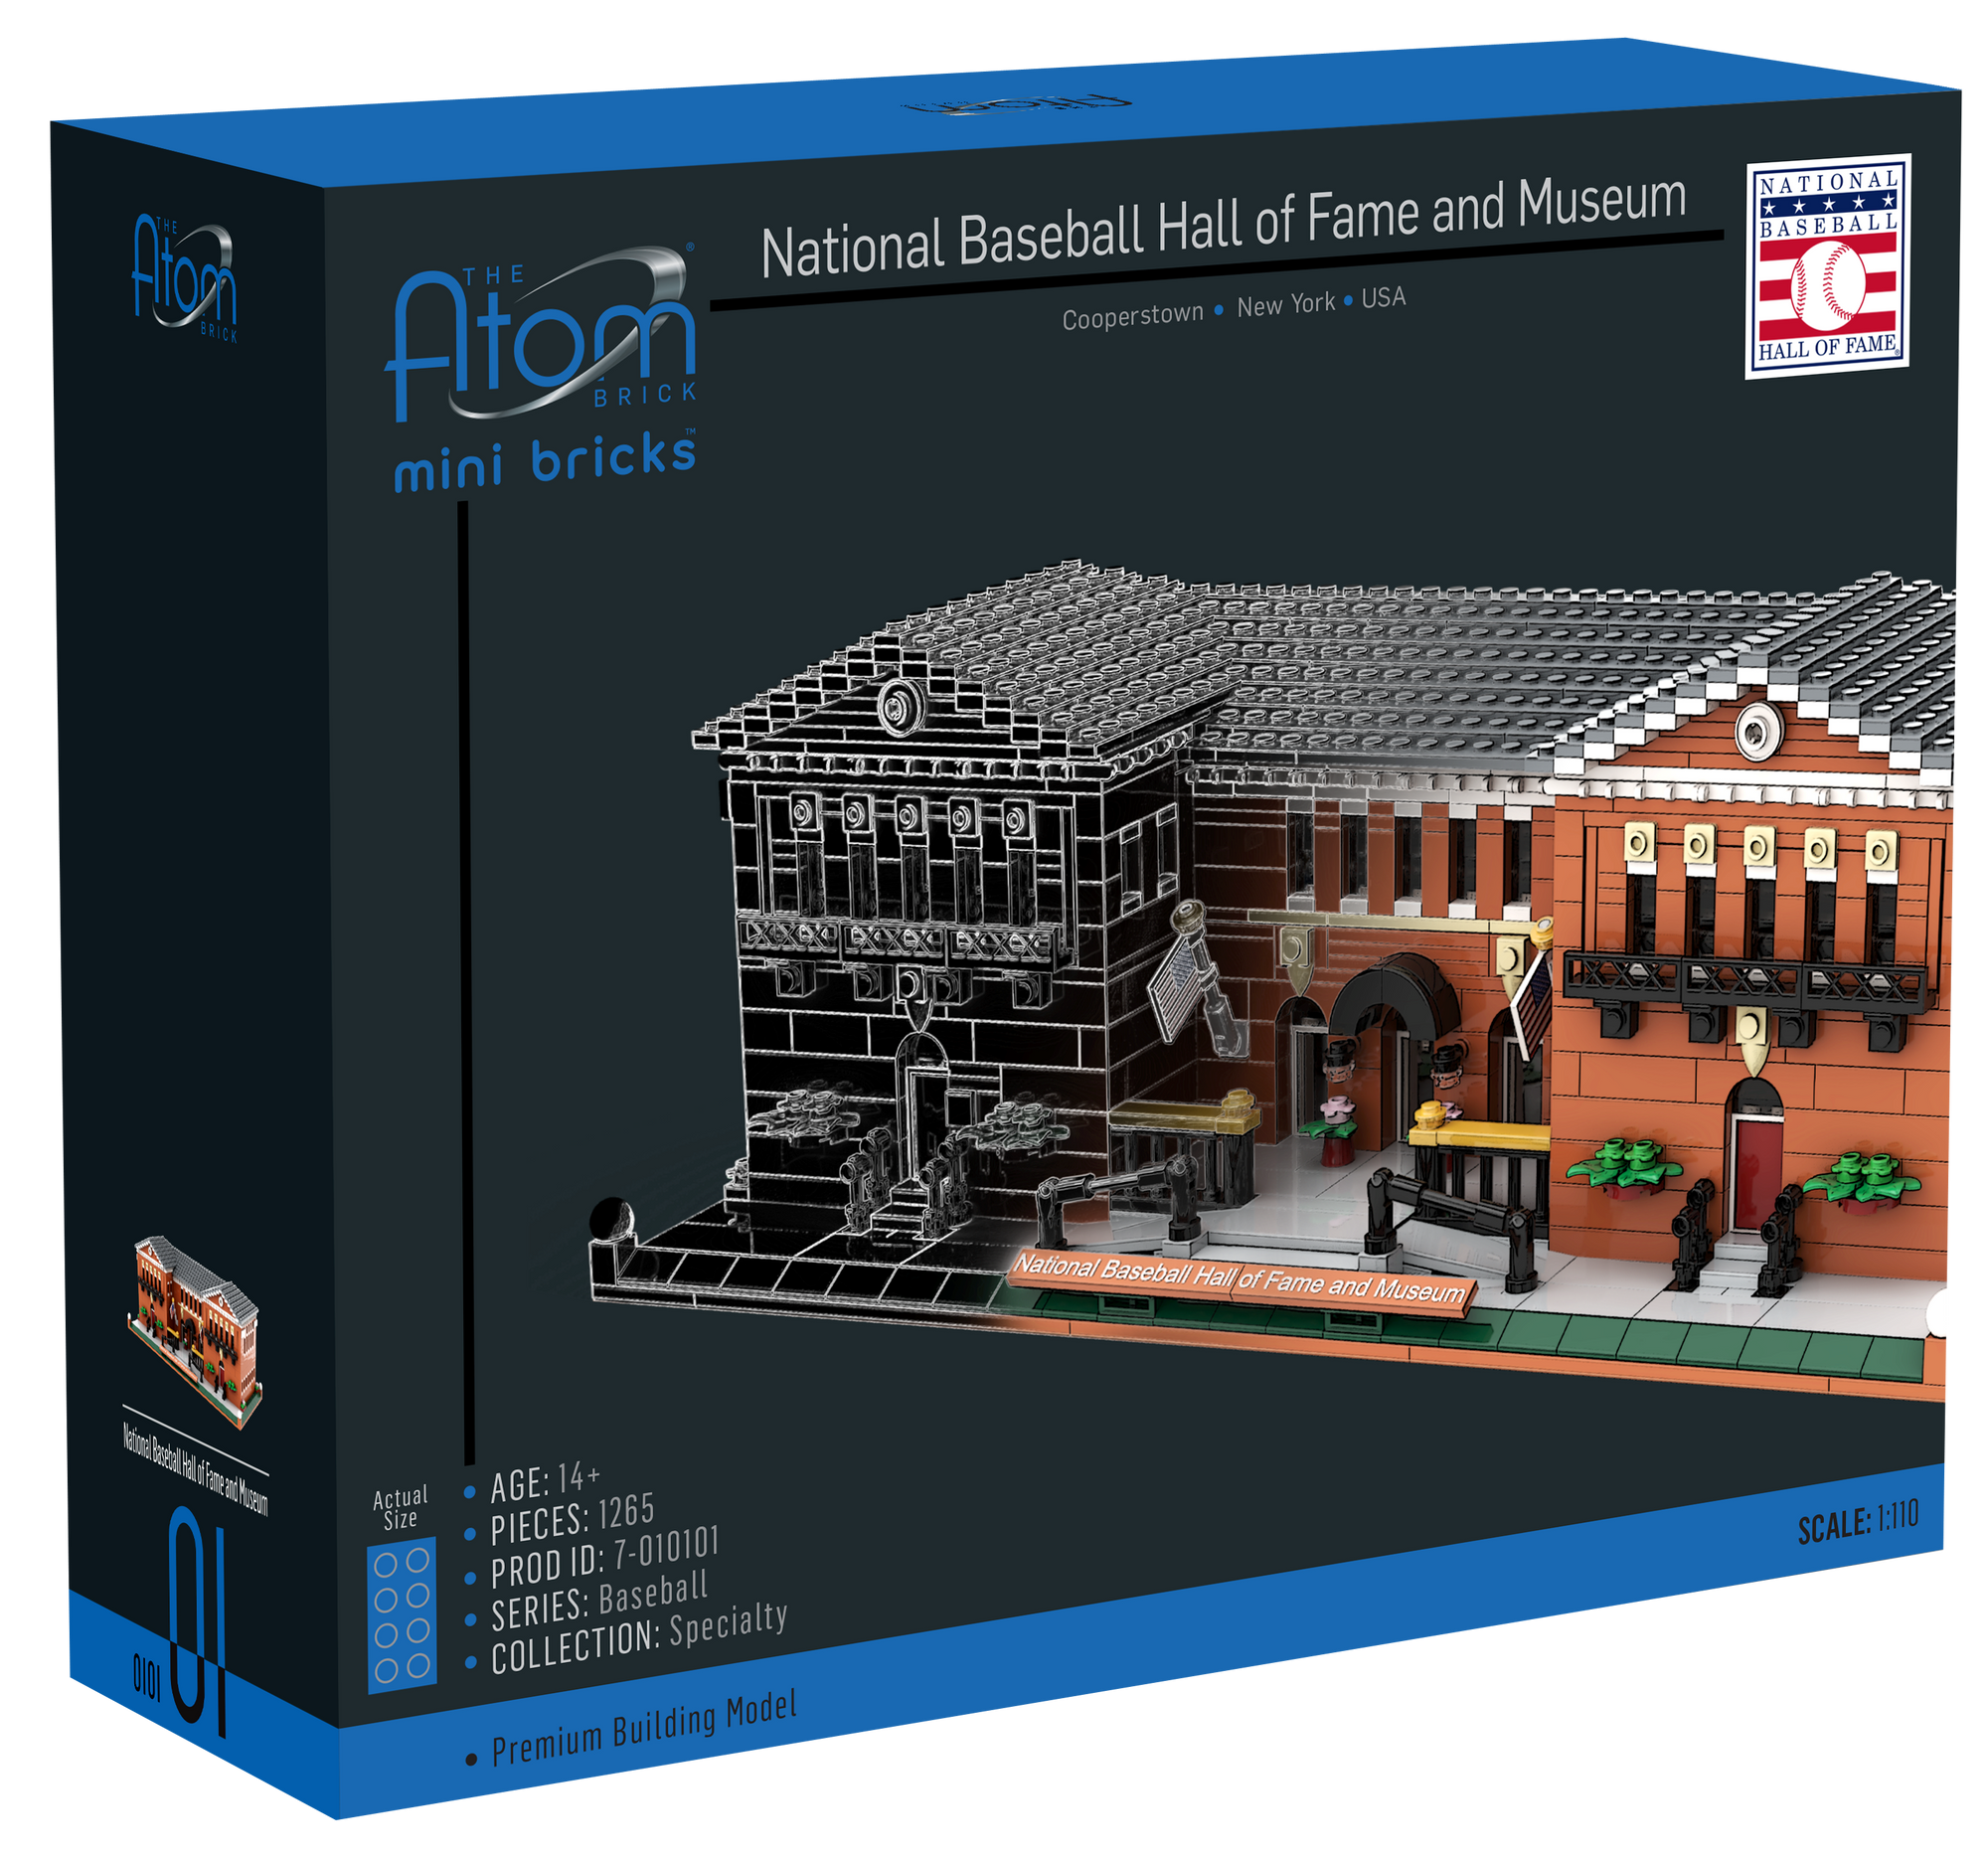 National Baseball Hall of Fame and Museum - The Atom Brick